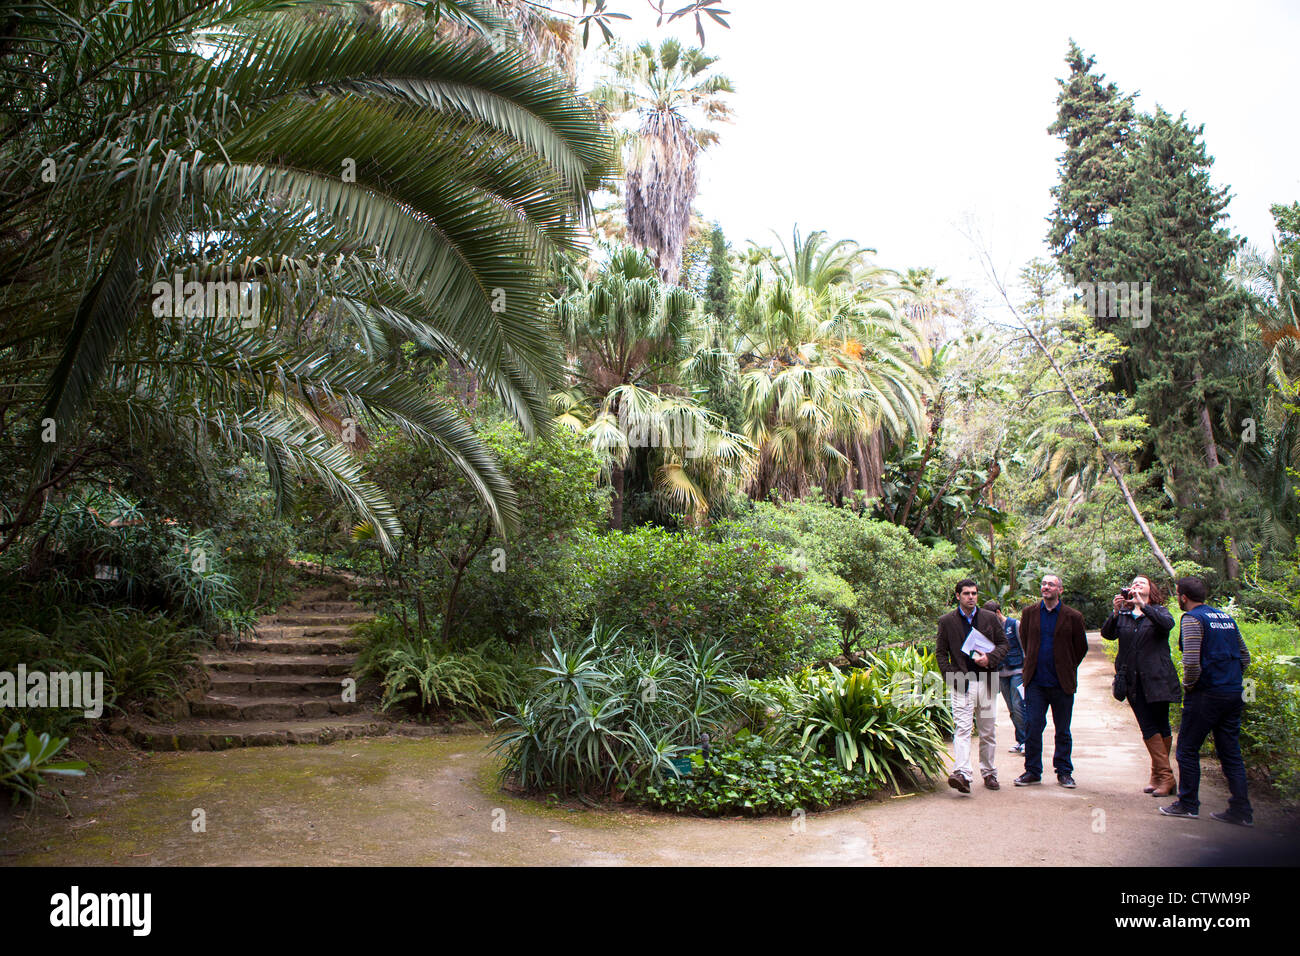 Botanical Gardens Malaga Spain Stock Photo 49737234 Alamy